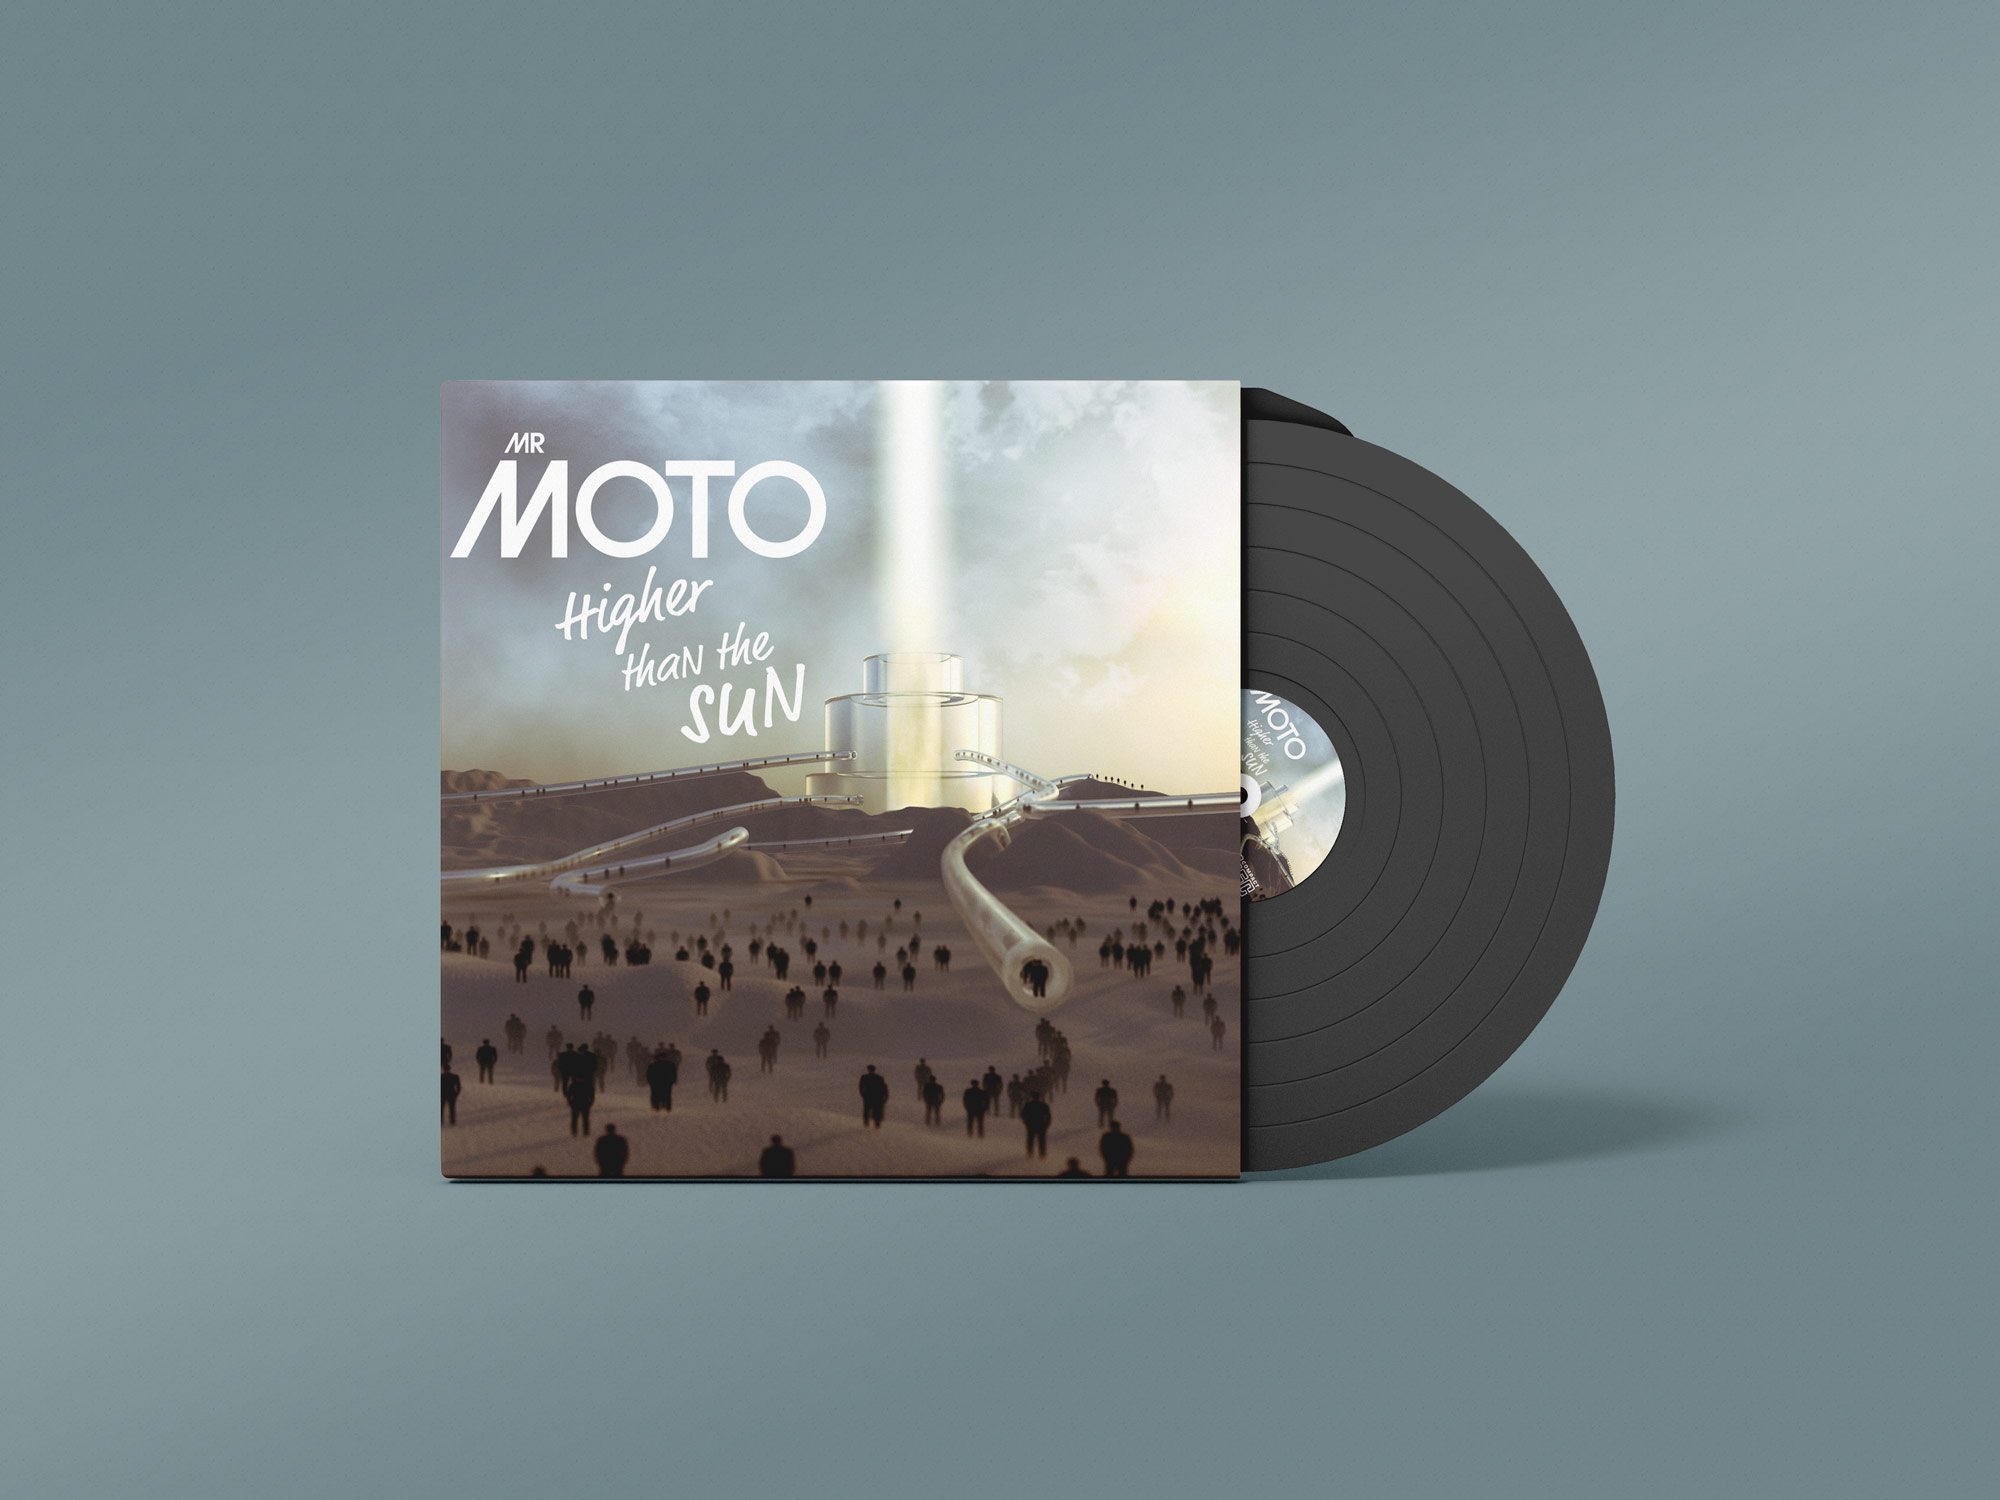 Mr Moto – Higher than the Sun